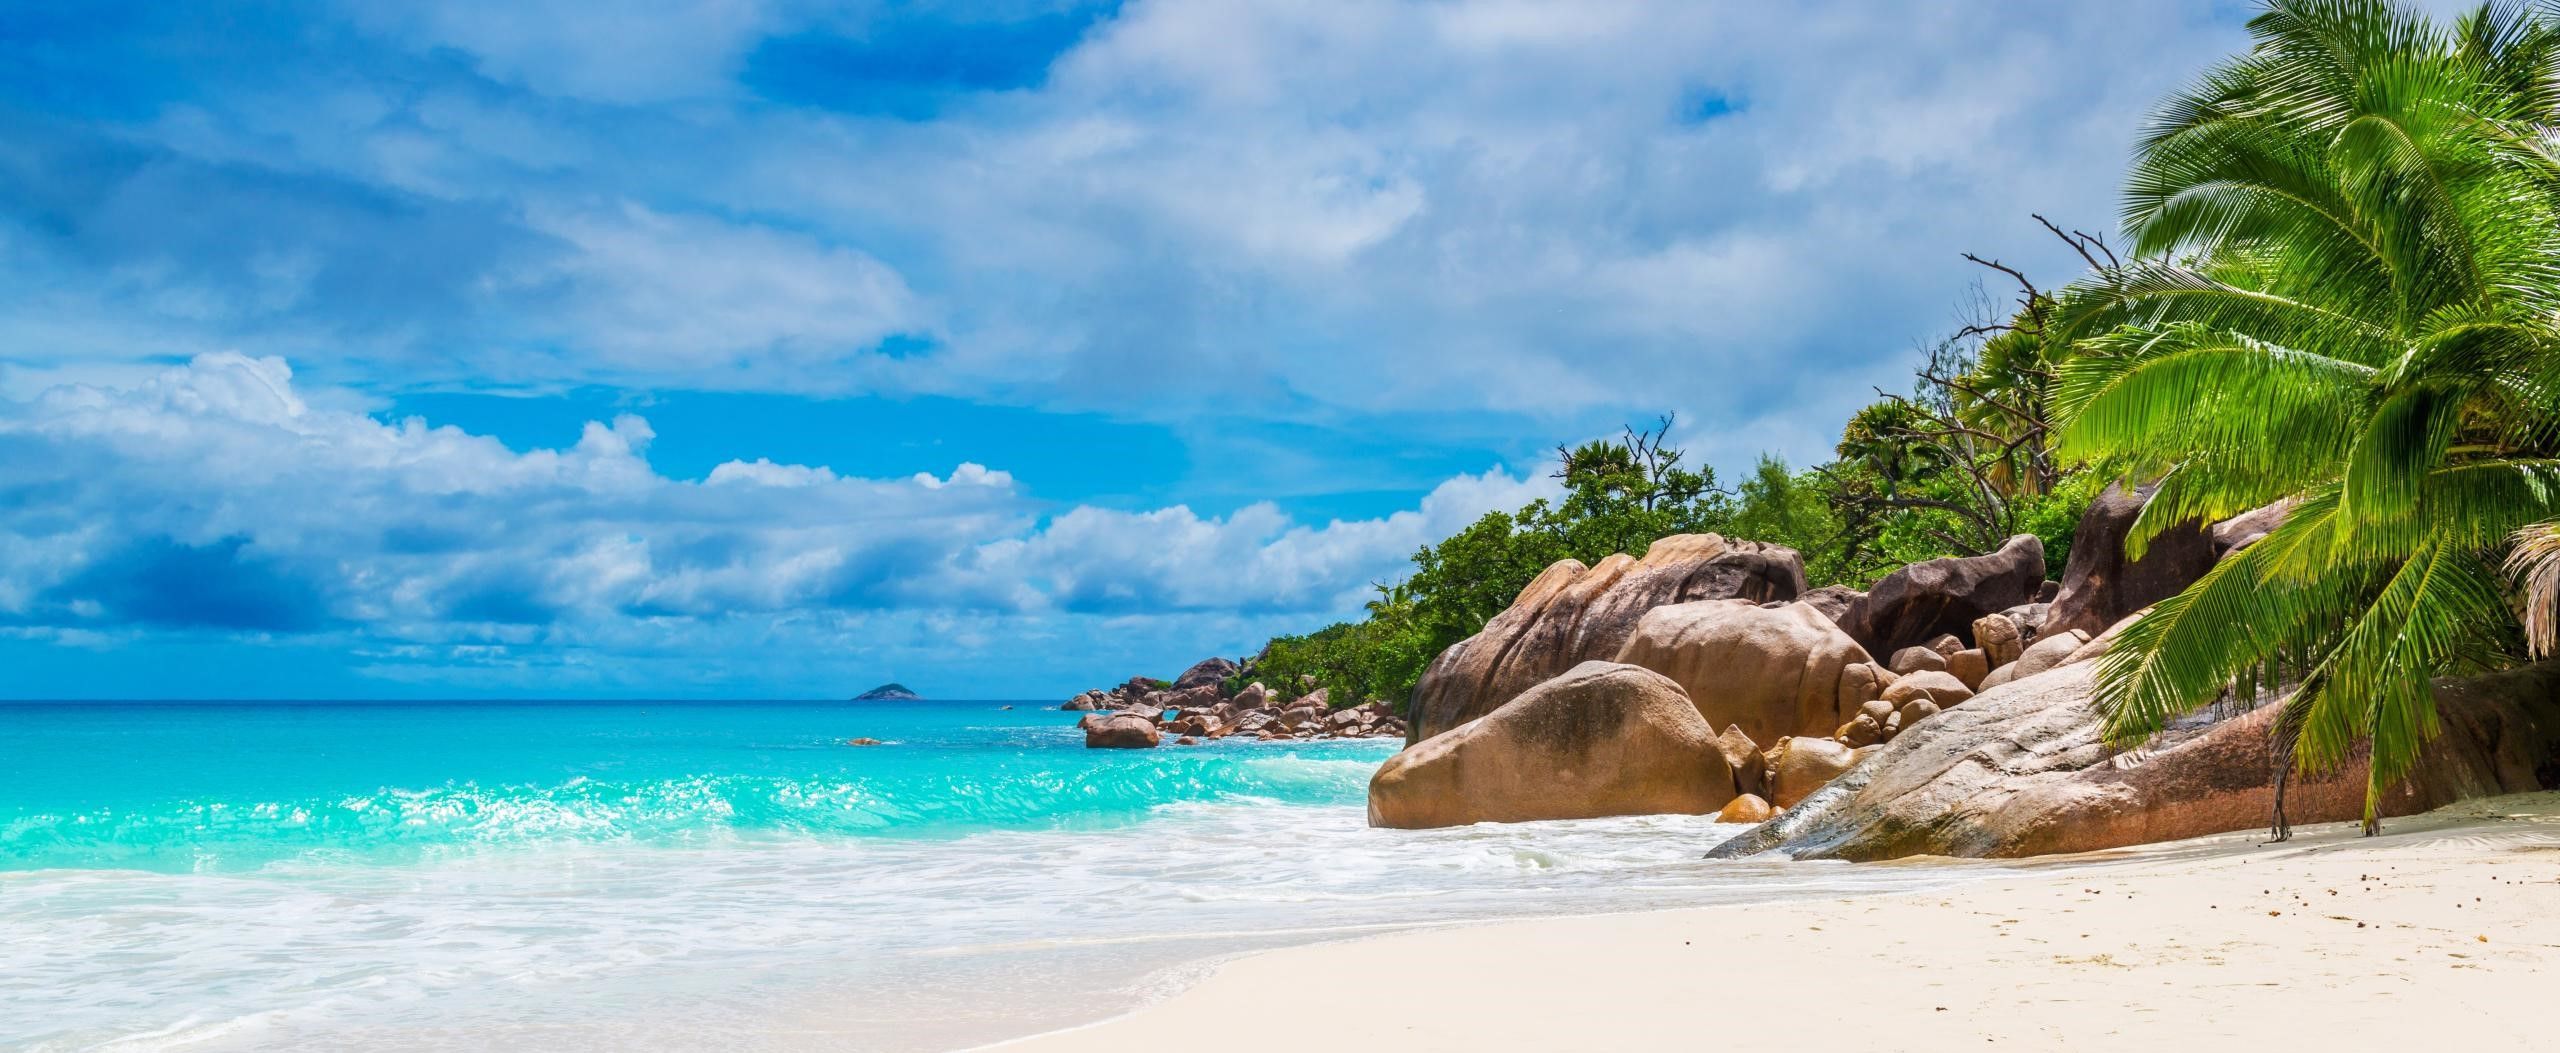 Beach in the Seychelles islands